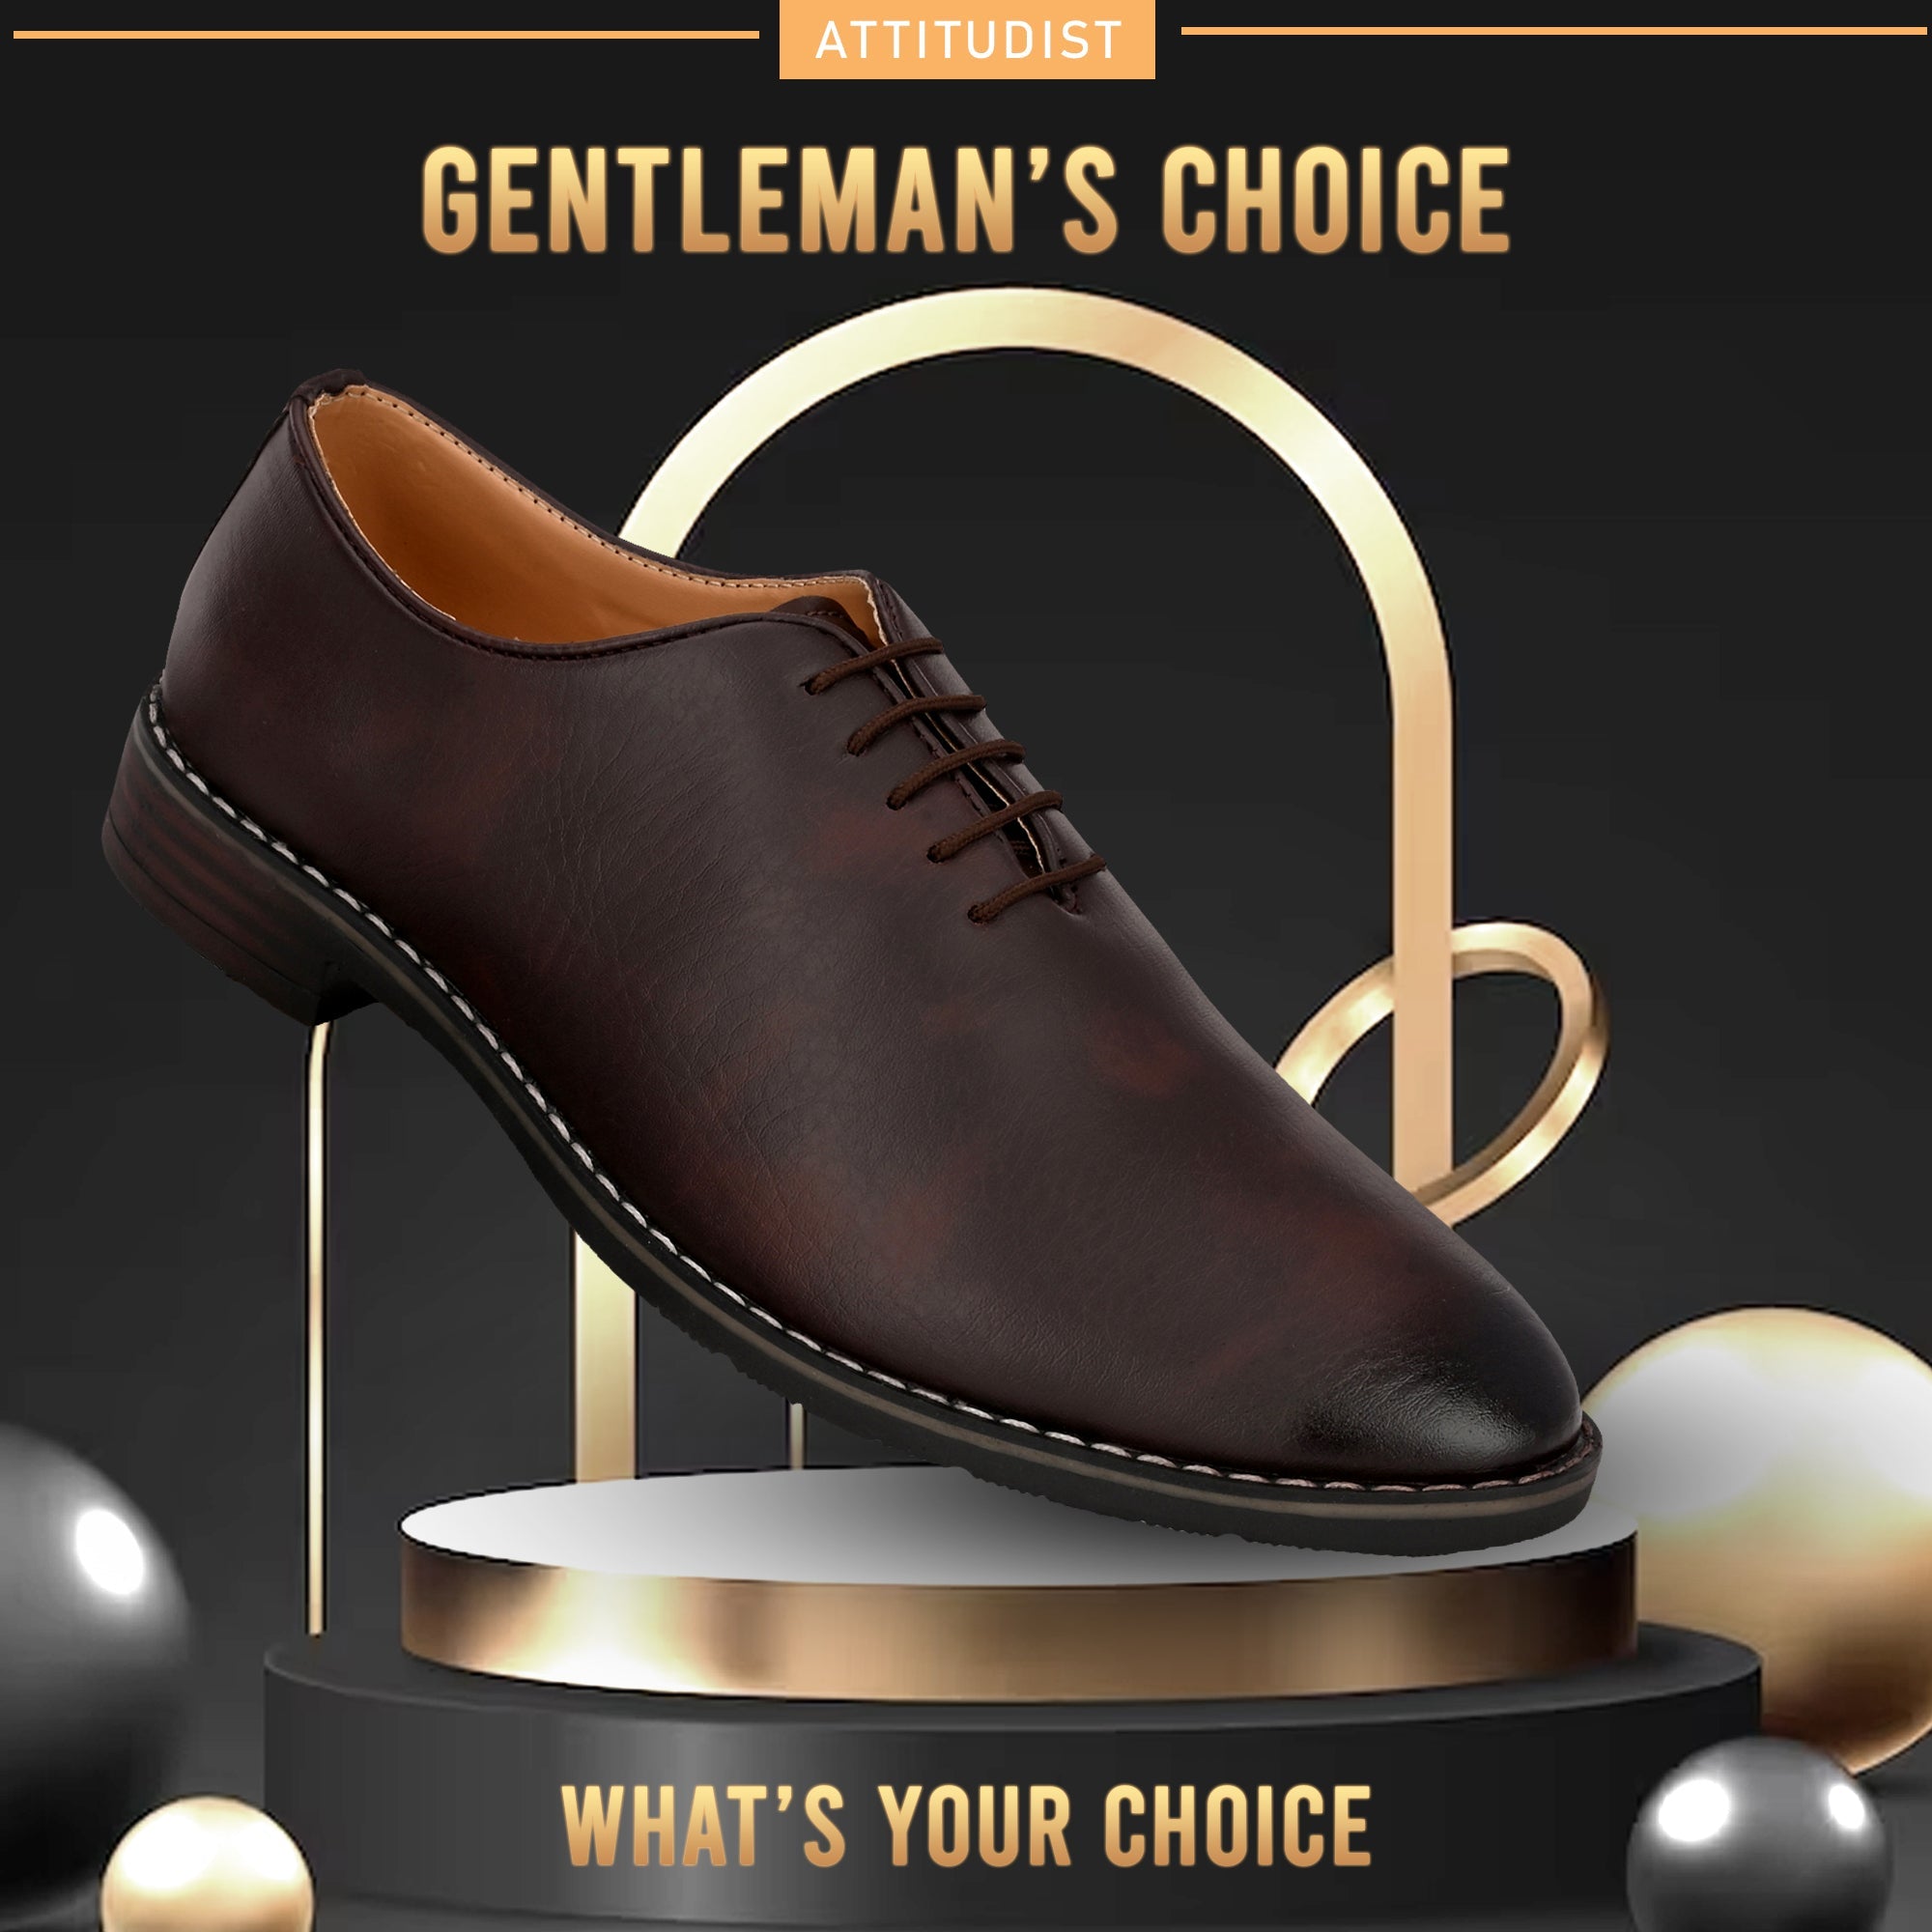 stylish-men-shoes-4007brown